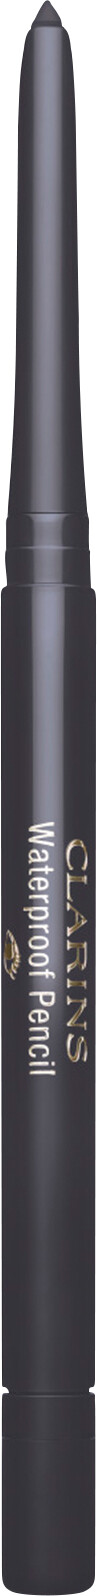 Clarins Waterproof Eye Pencil 0.29g 06 - Smoked Wood